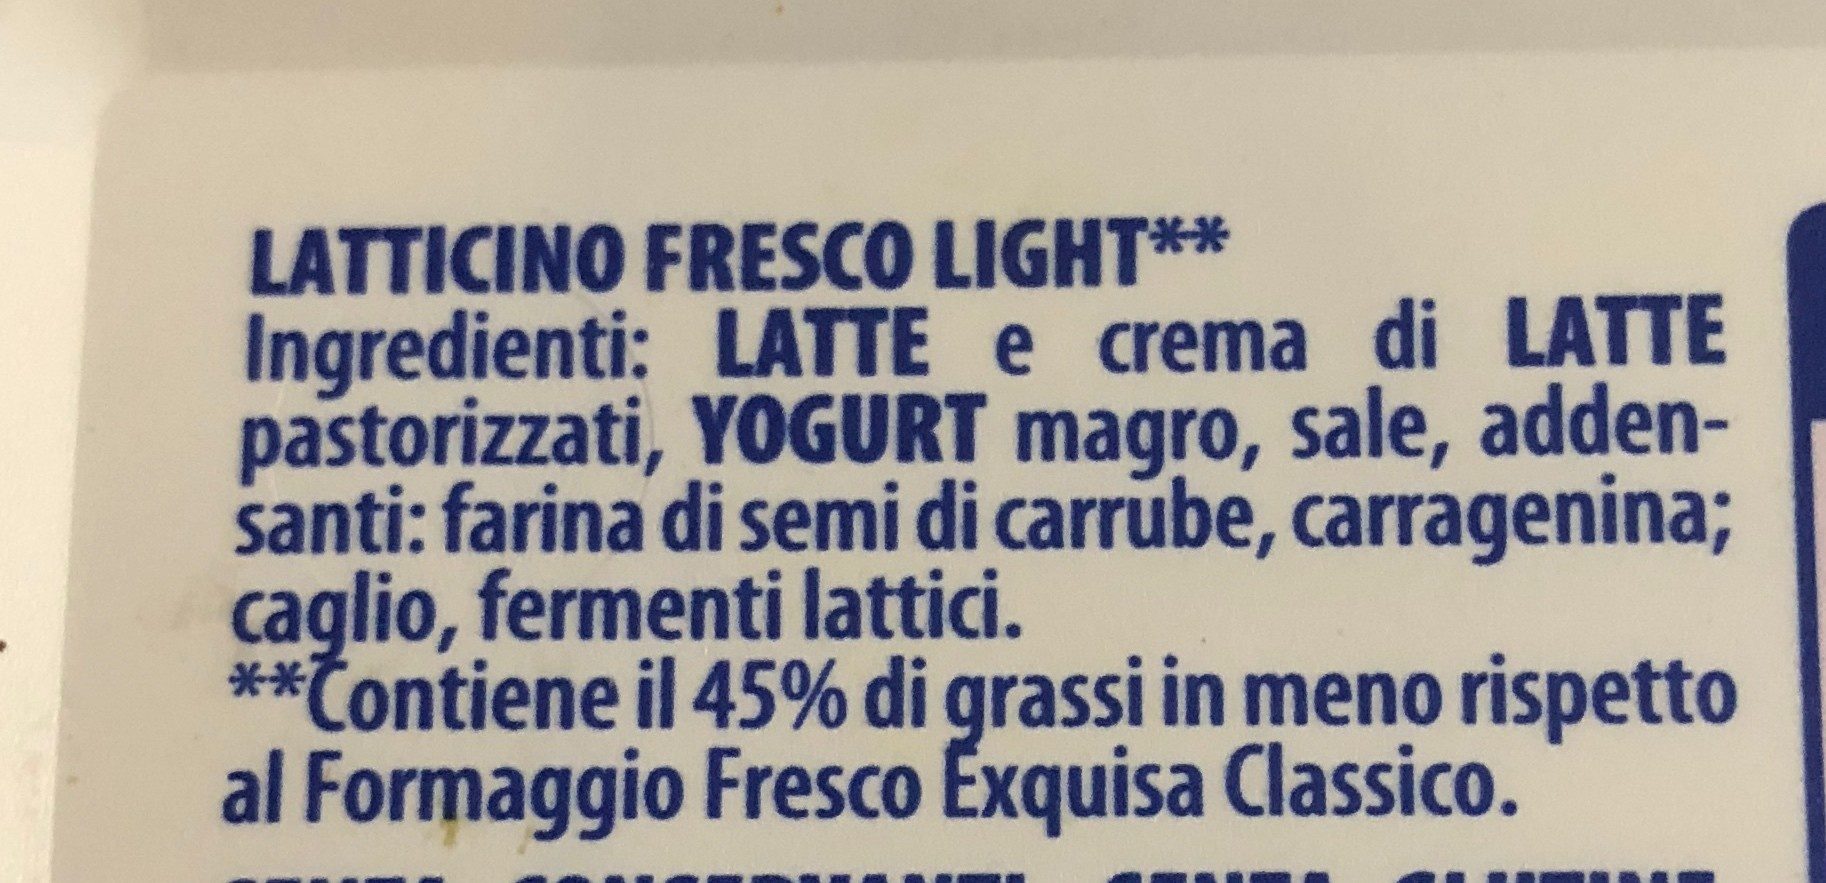 Light latticino fresco cremoso - Ingredients - fr